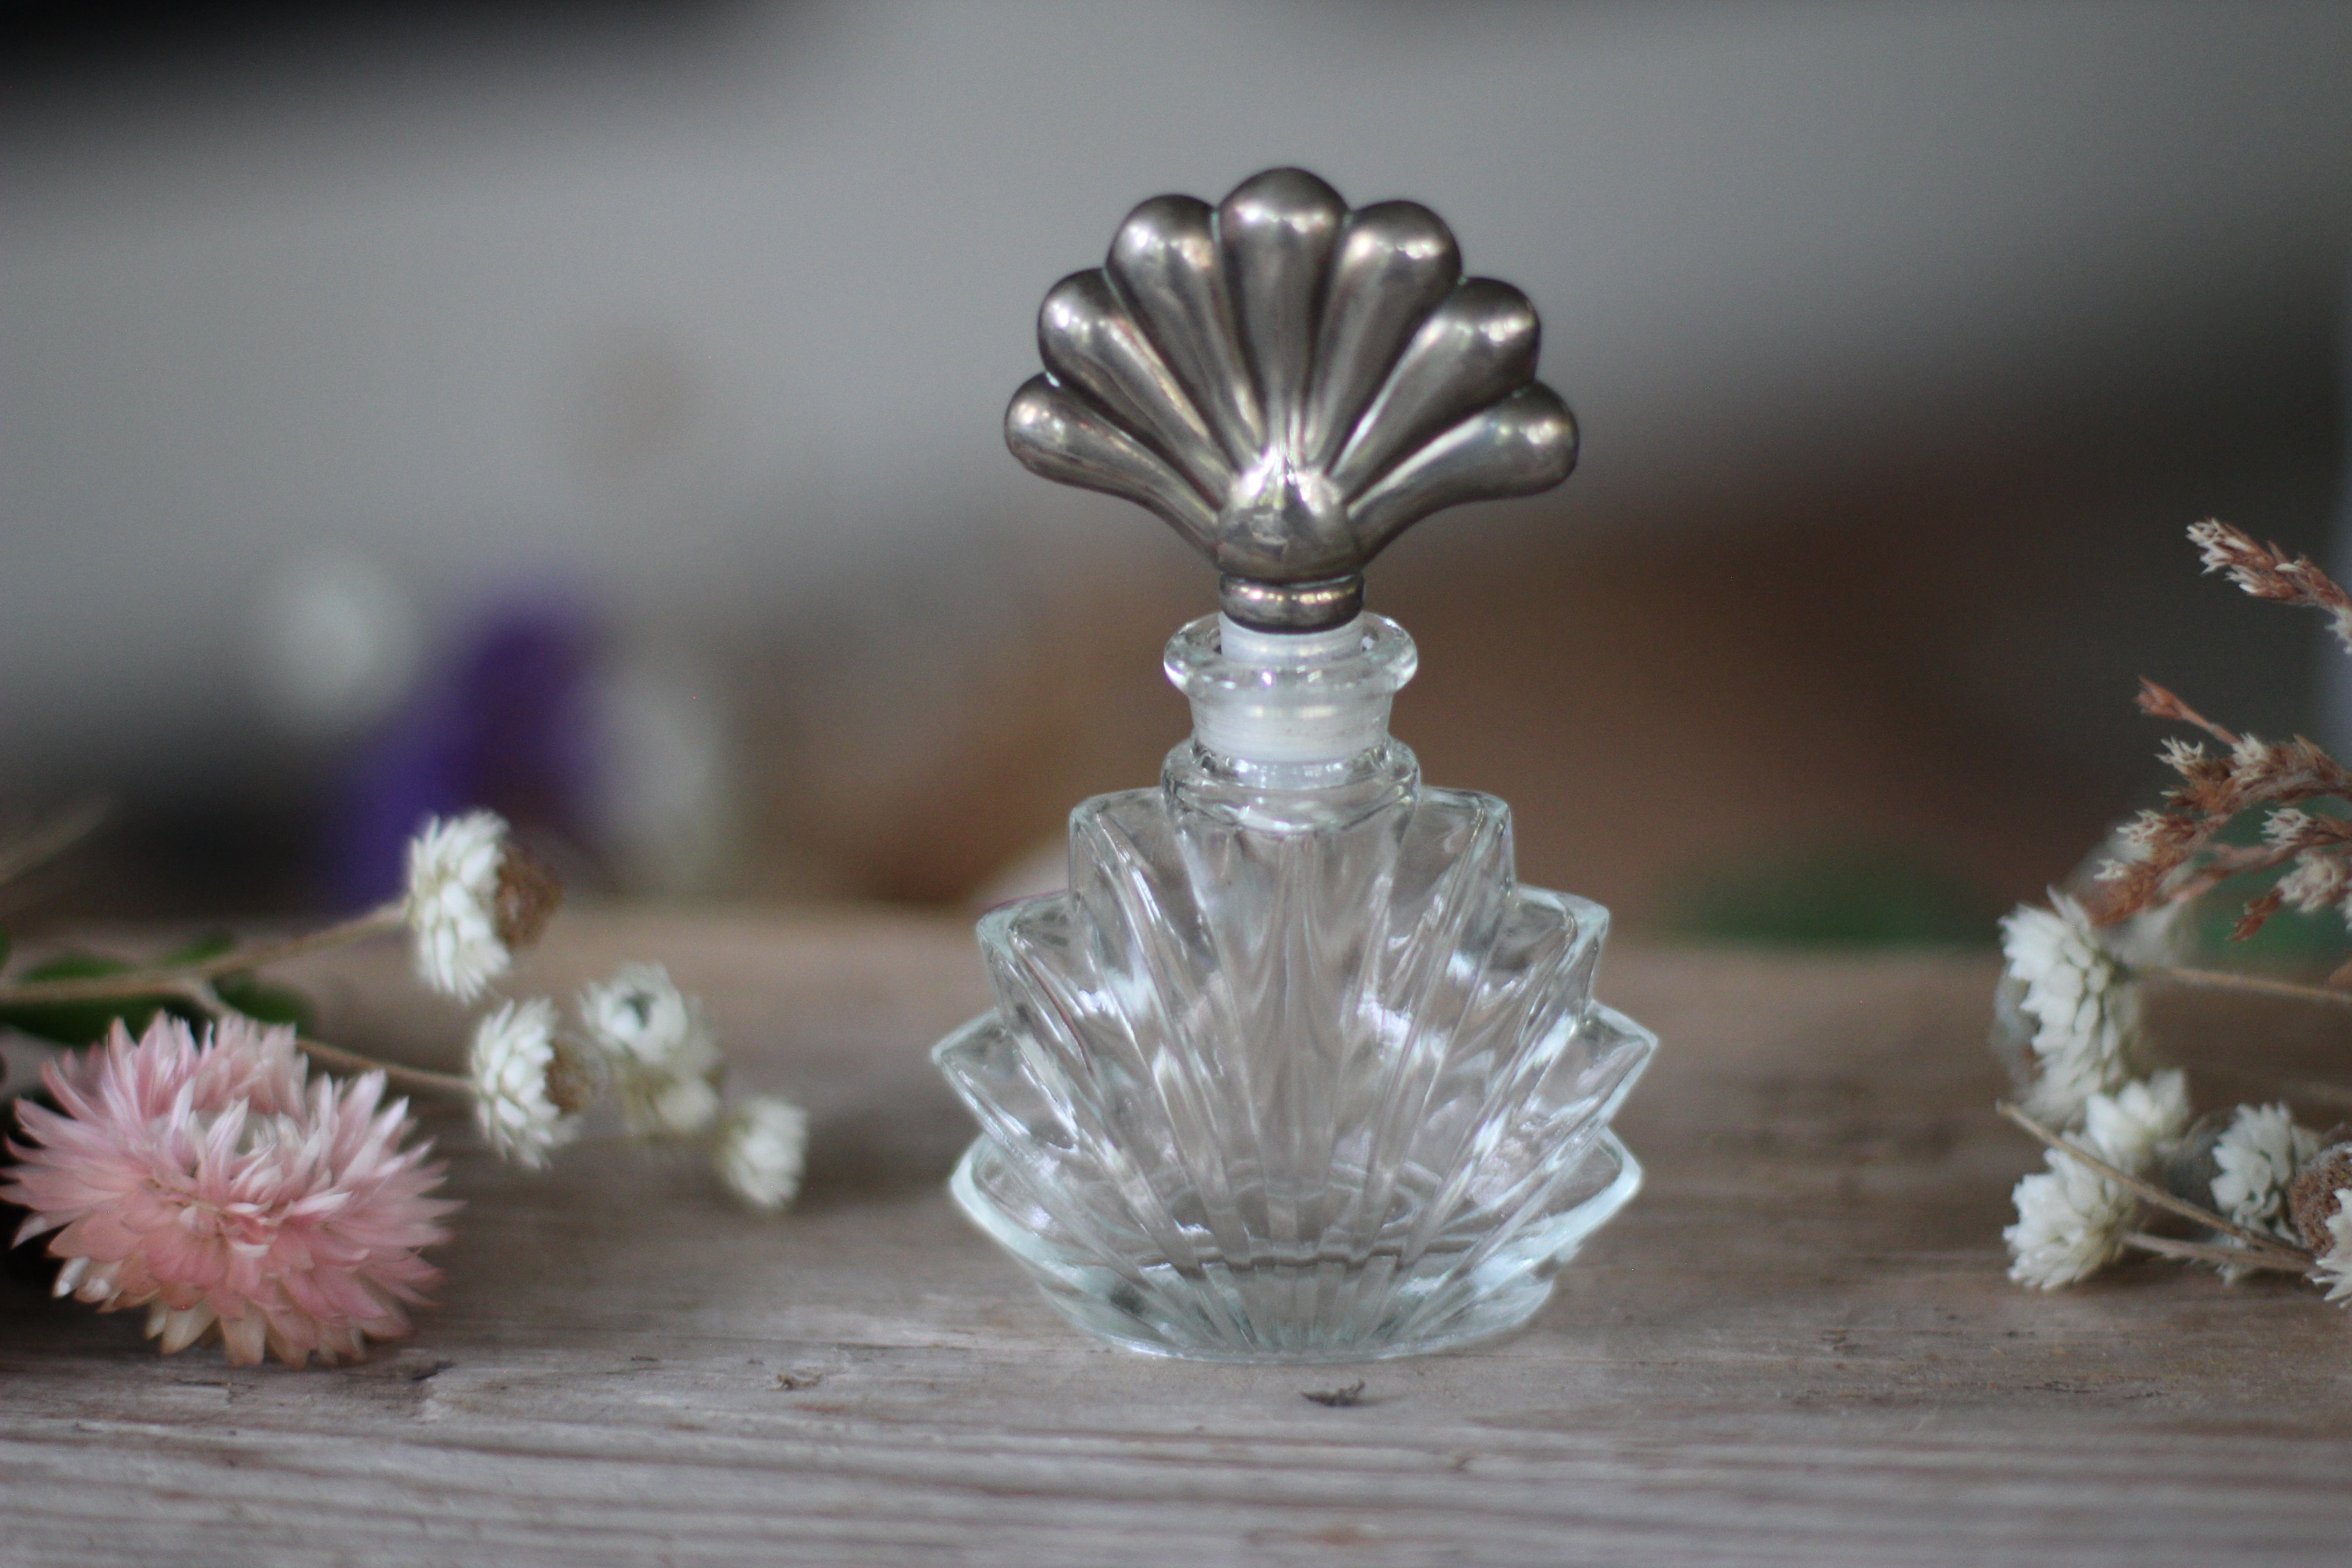 Antique Silver Seashell Perfume Bottle